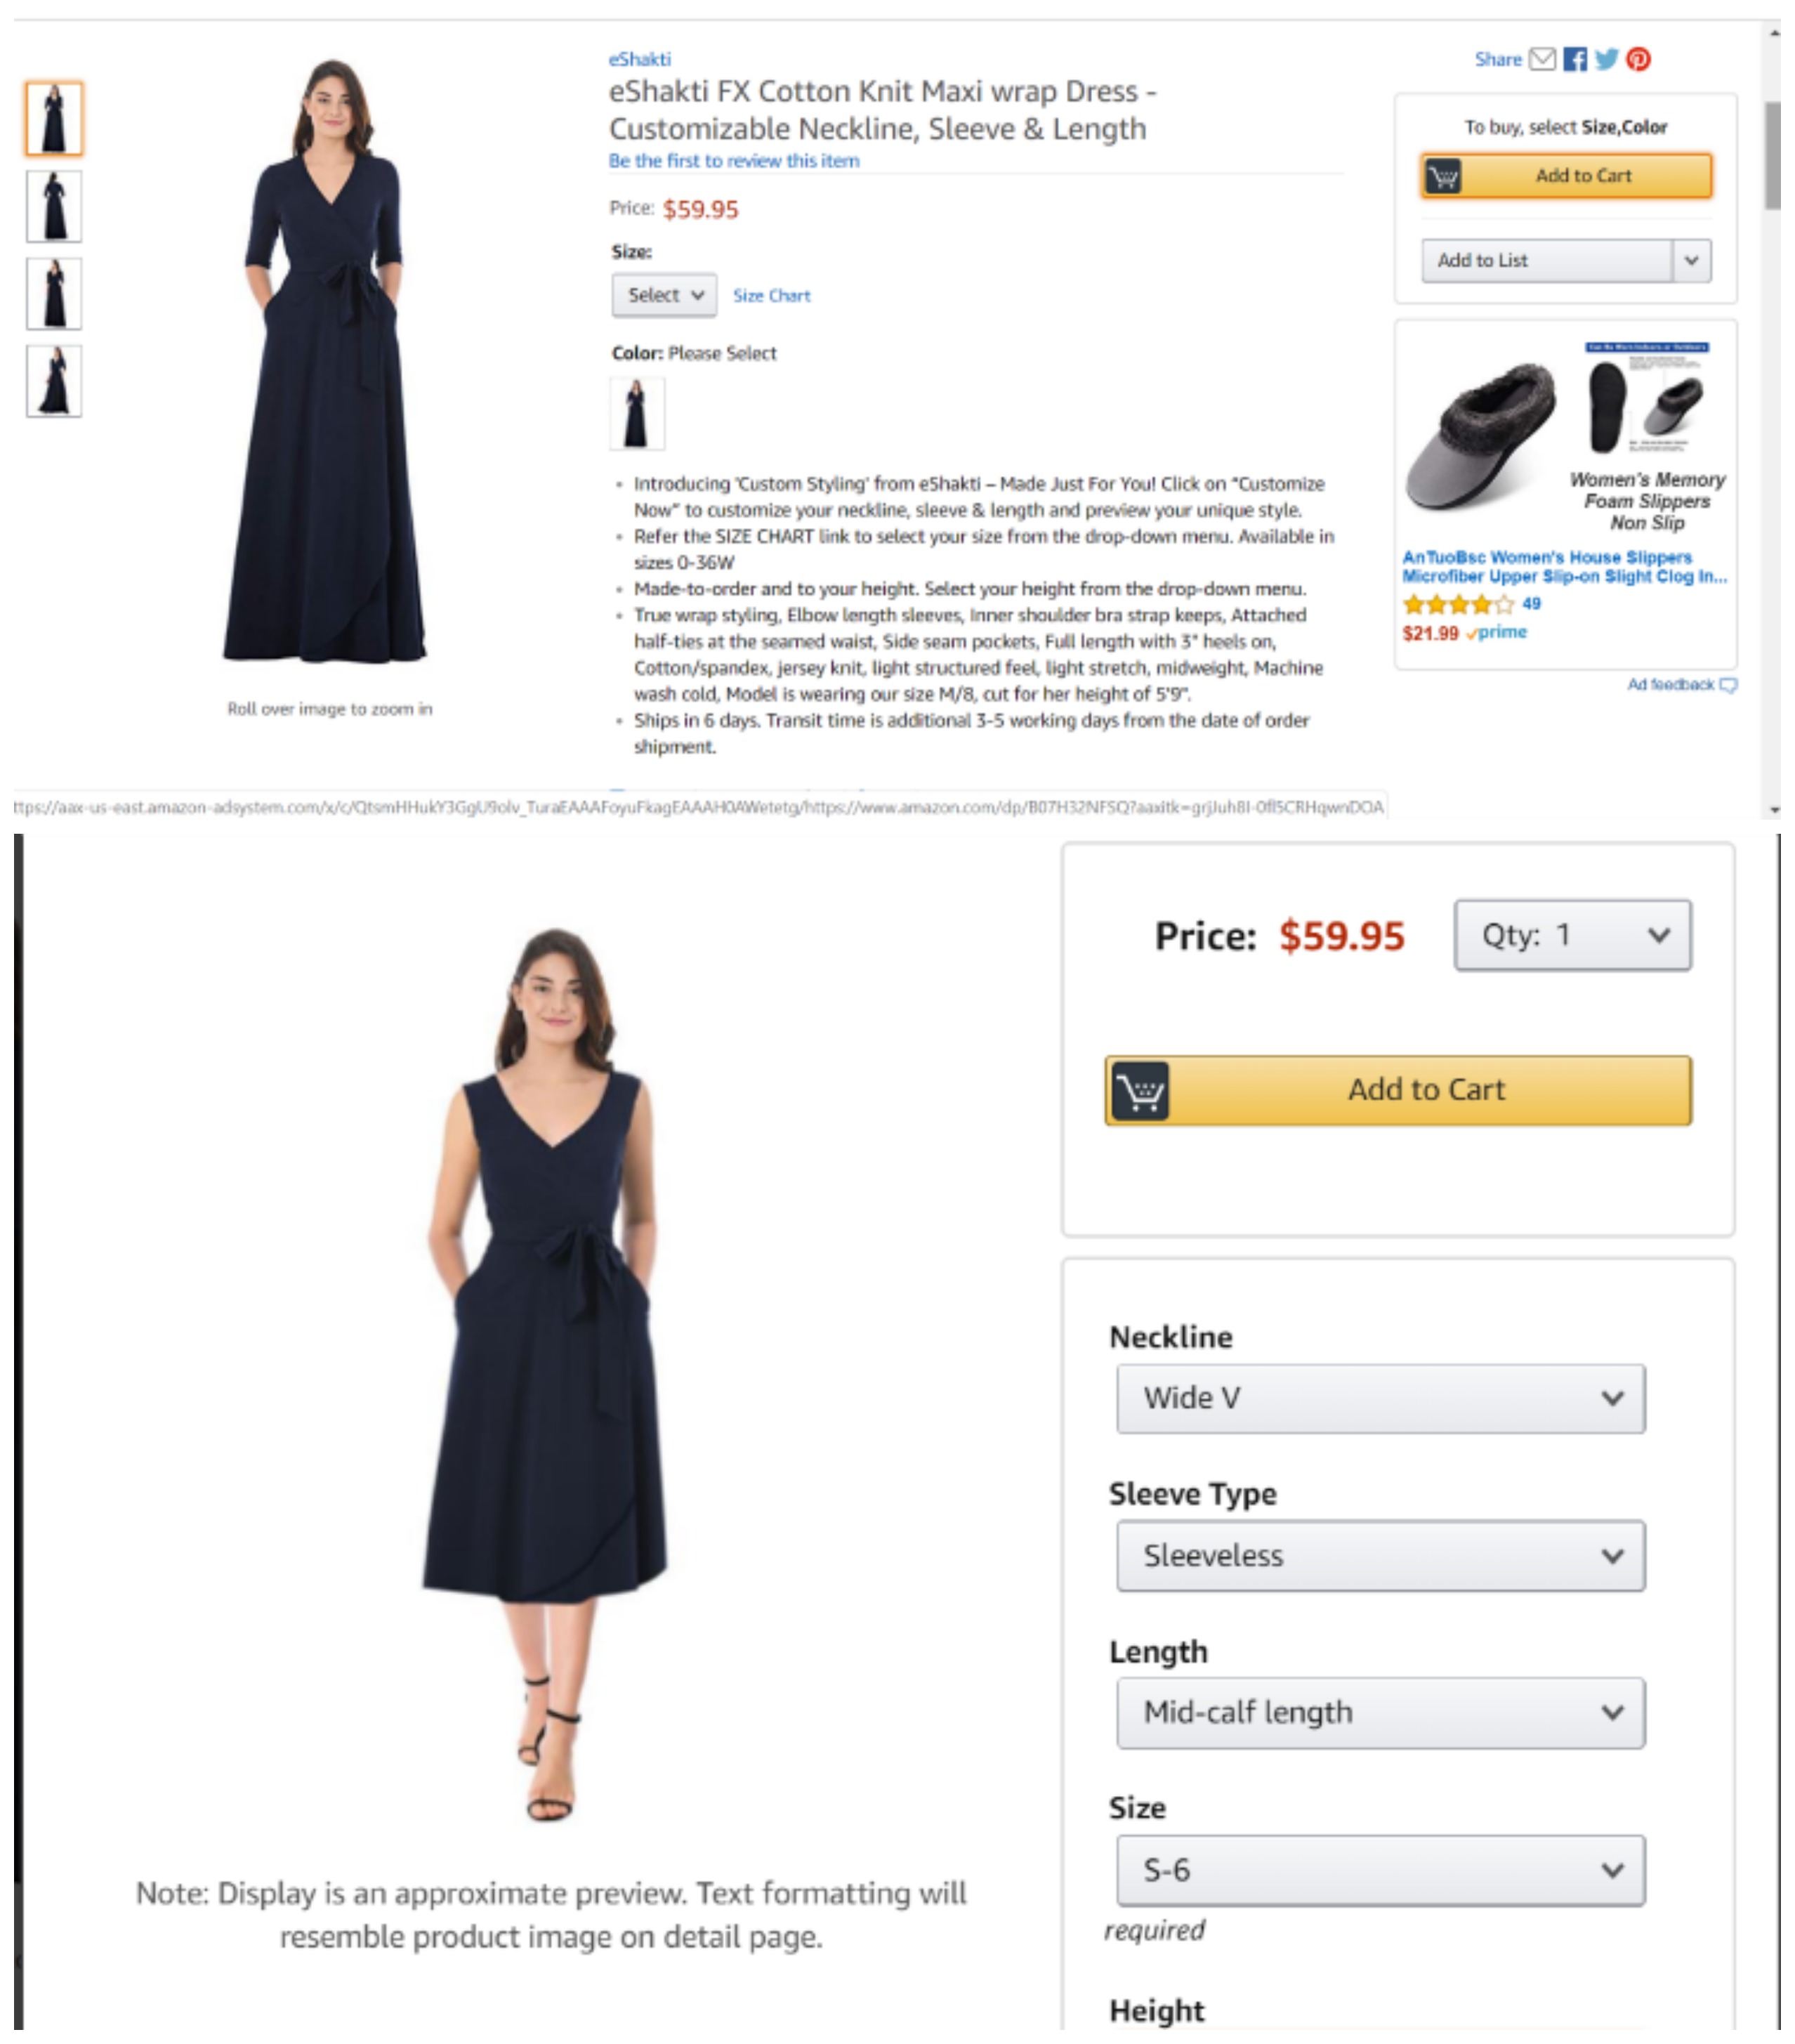 eShakti Custom Styling now on Amazon, eShakti FX on Amazon, AD